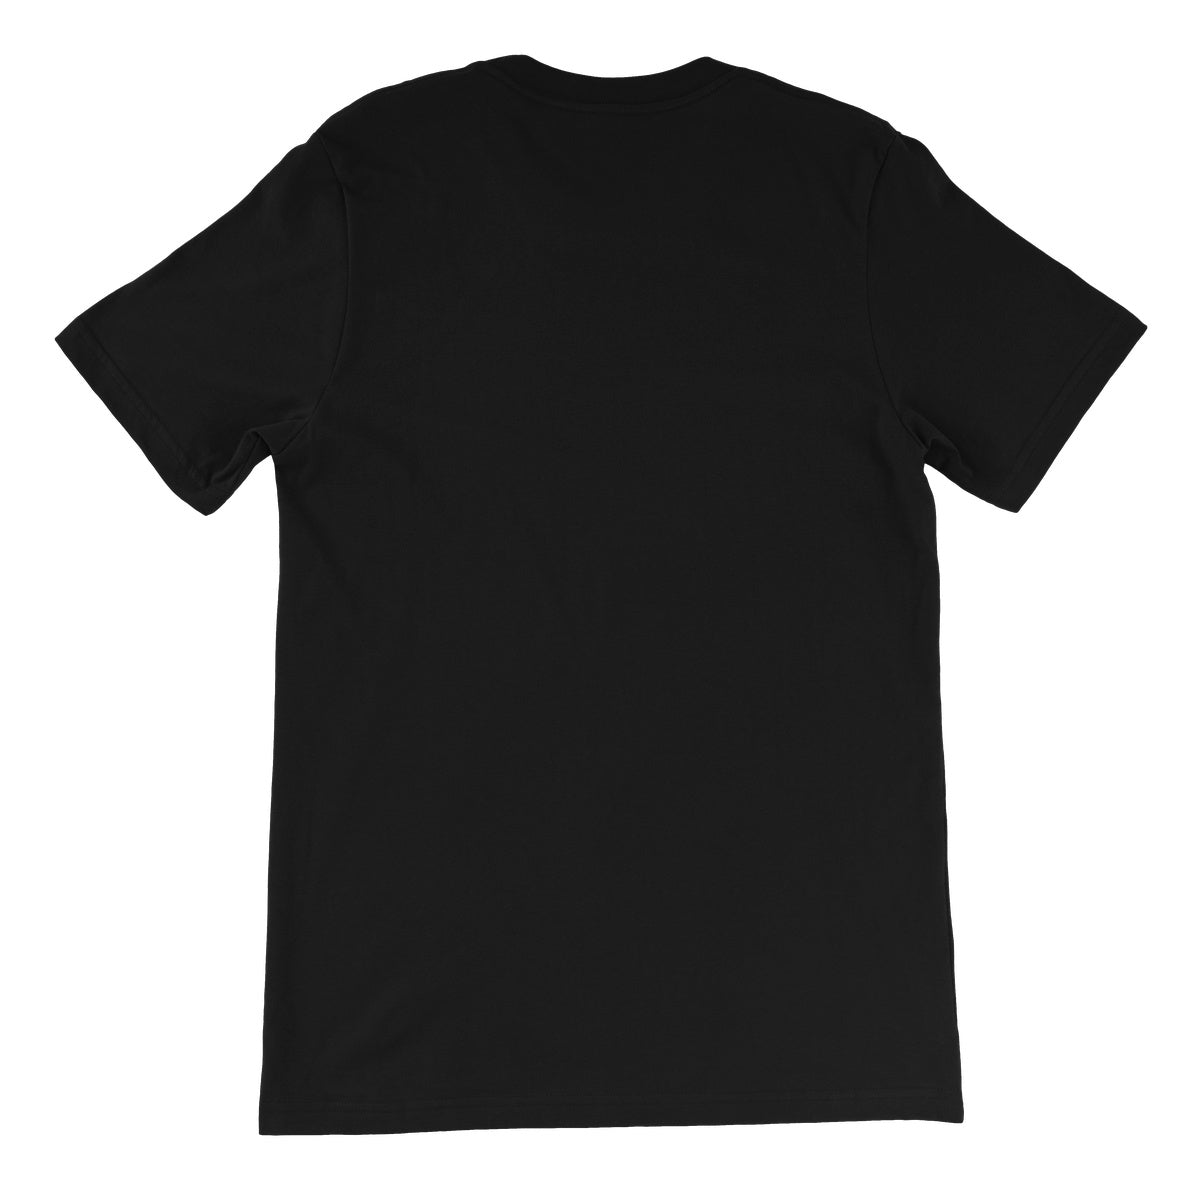 2020 Slammiversary Tommy Dreamer Unisex Short Sleeve T-Shirt